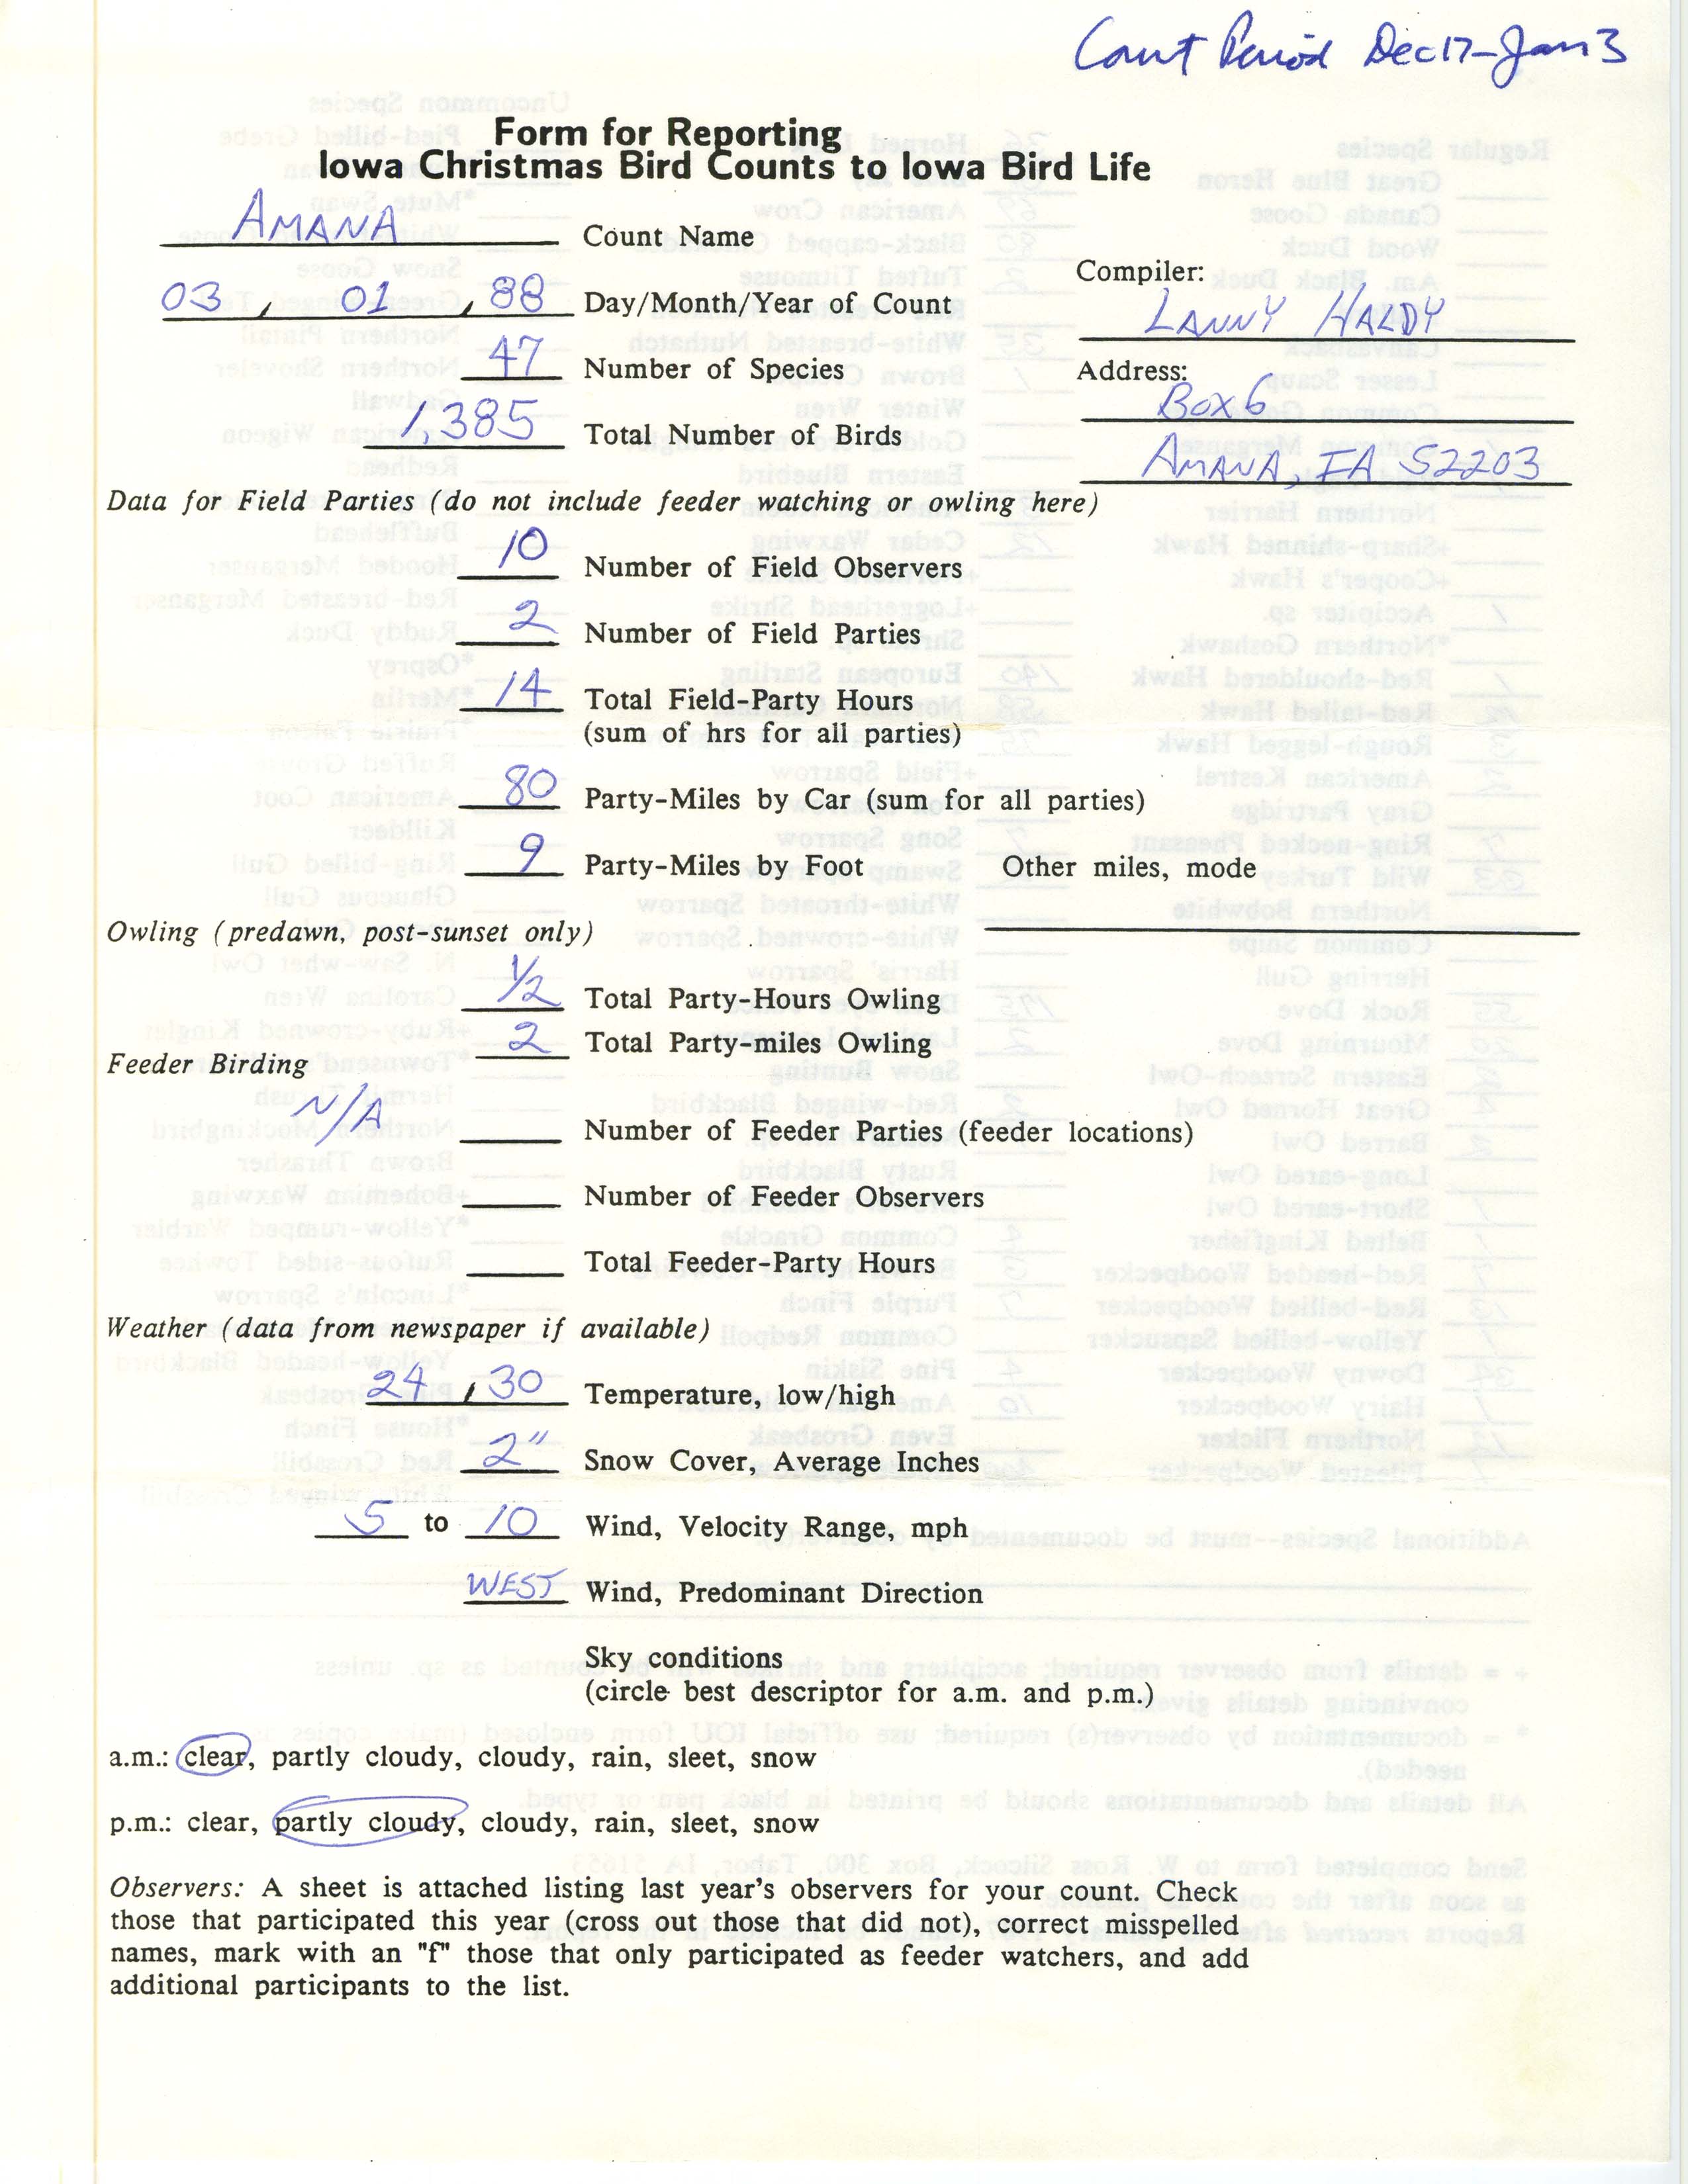 Form for reporting Iowa Christmas bird counts to Iowa Bird Life, Lanny Haldy, March 1, 1988